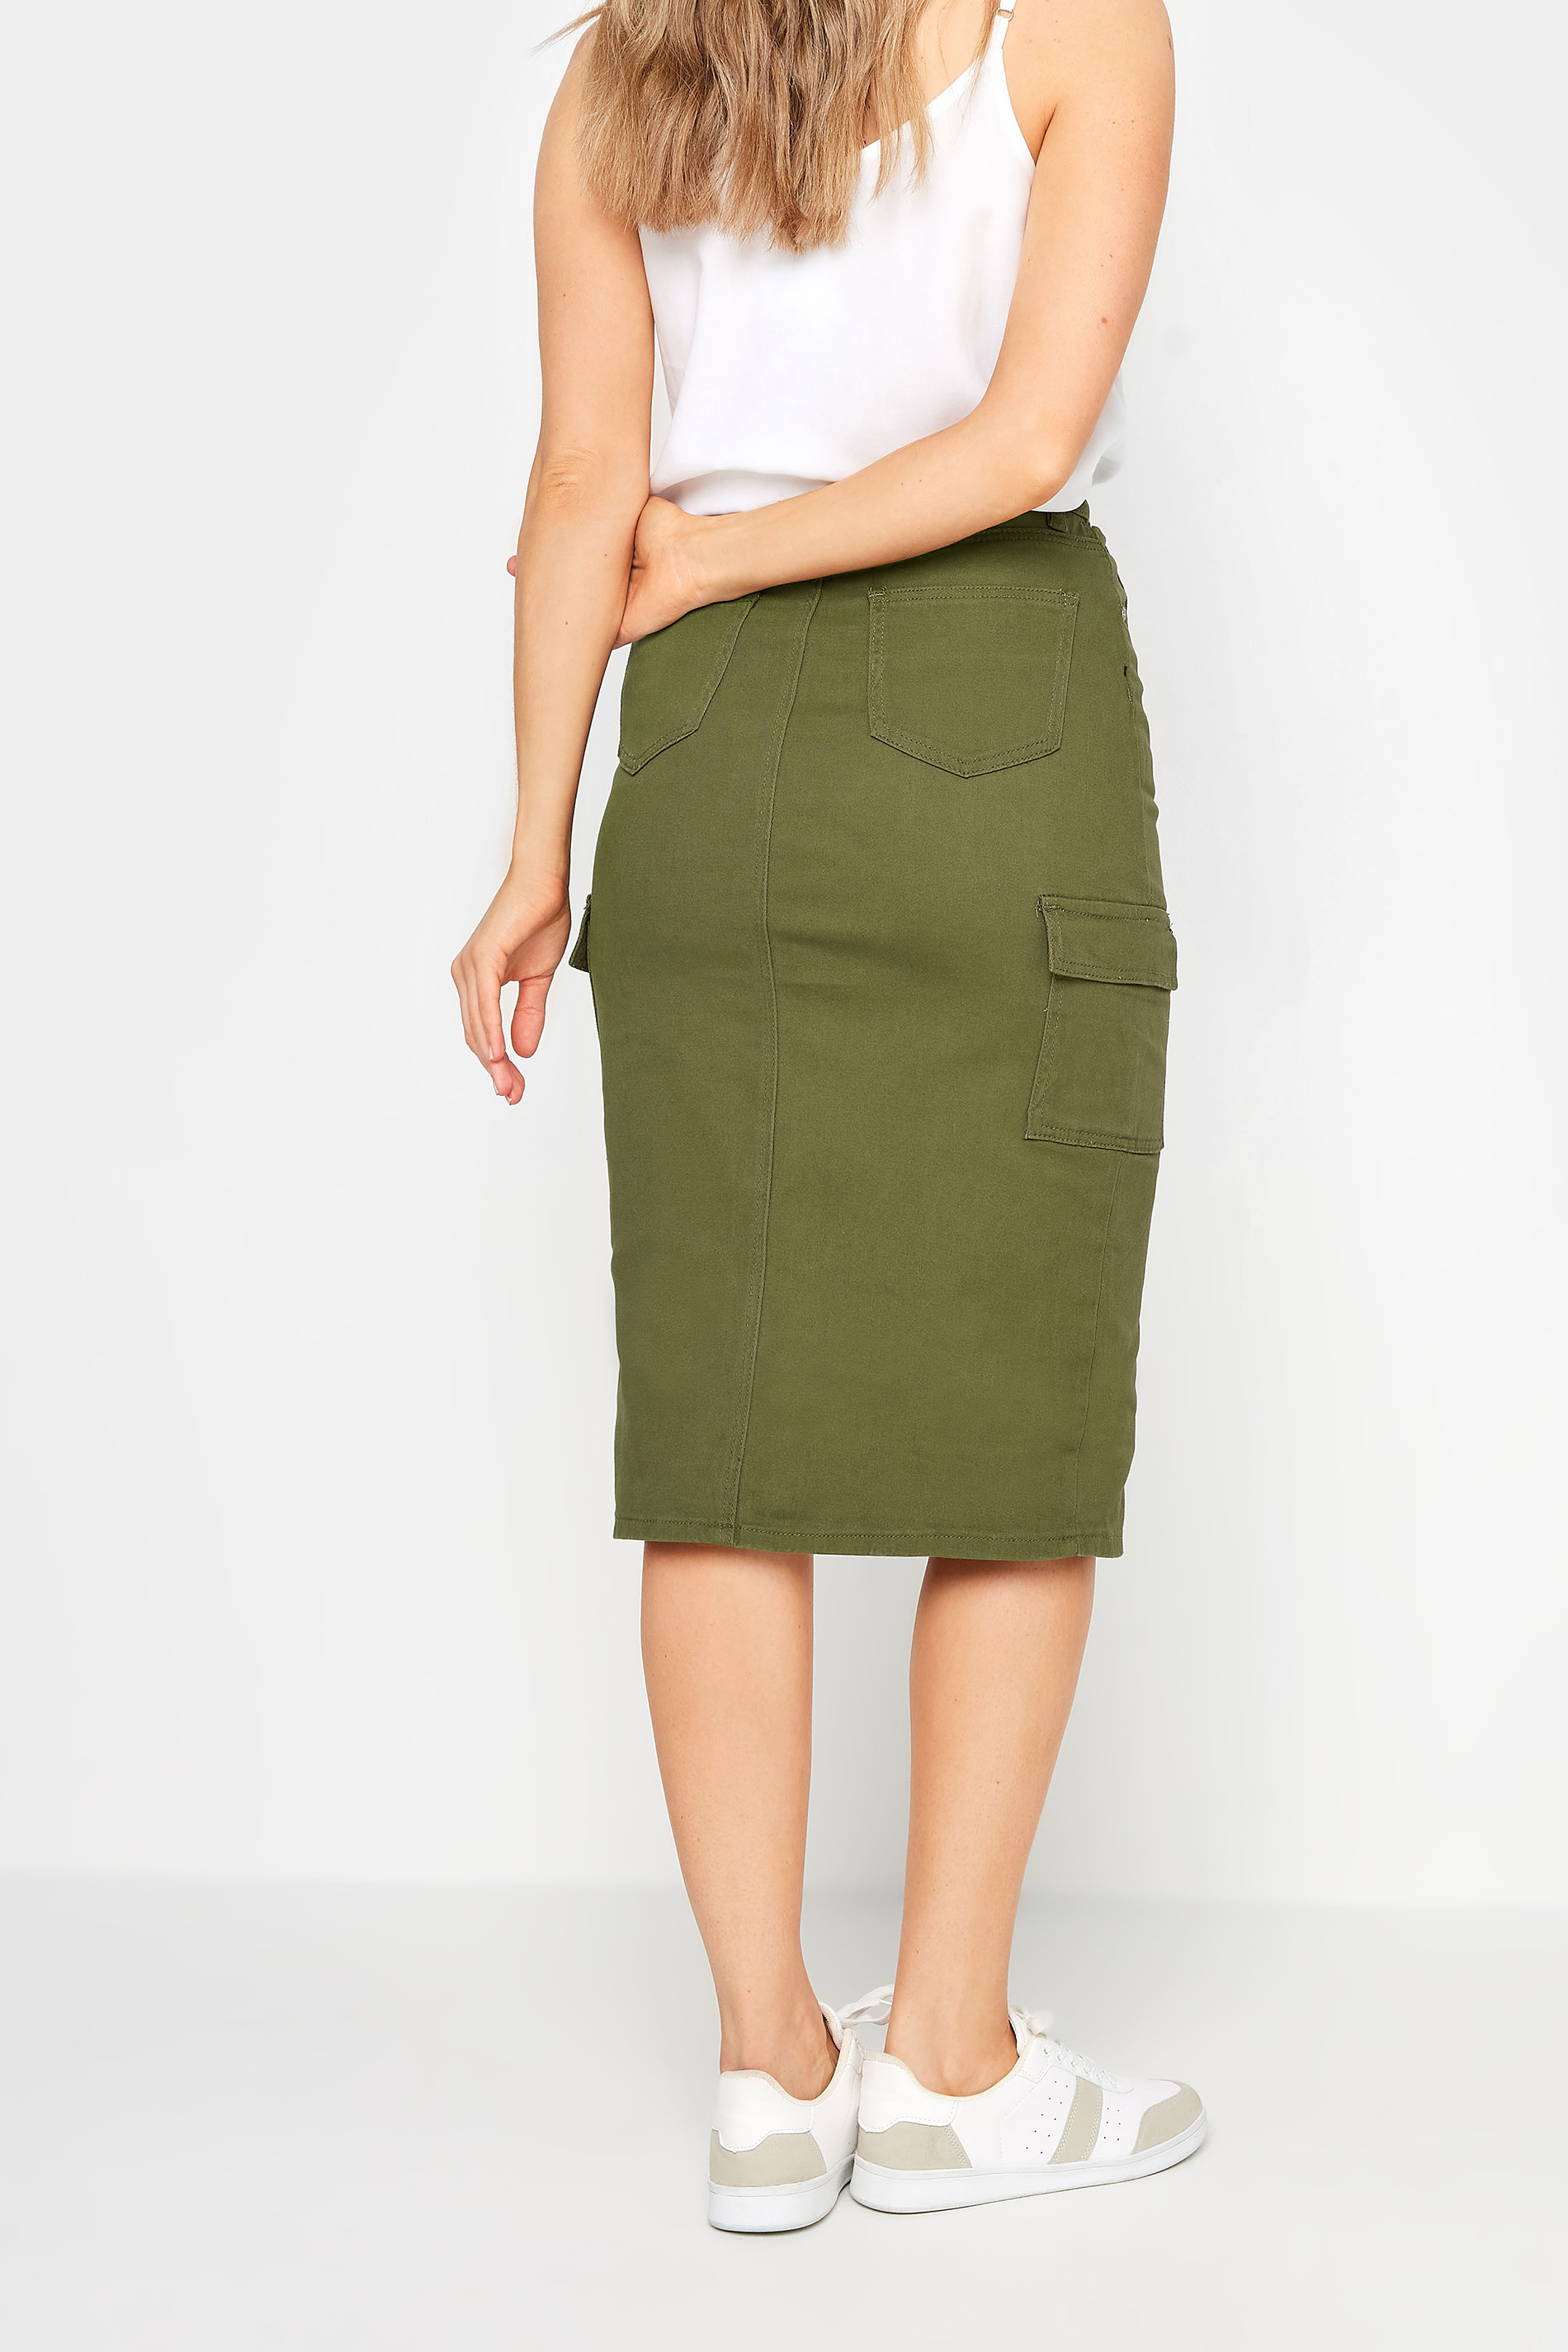 LTS Tall Khaki Green Cargo Midi Skirt | Long Tall Sally 3